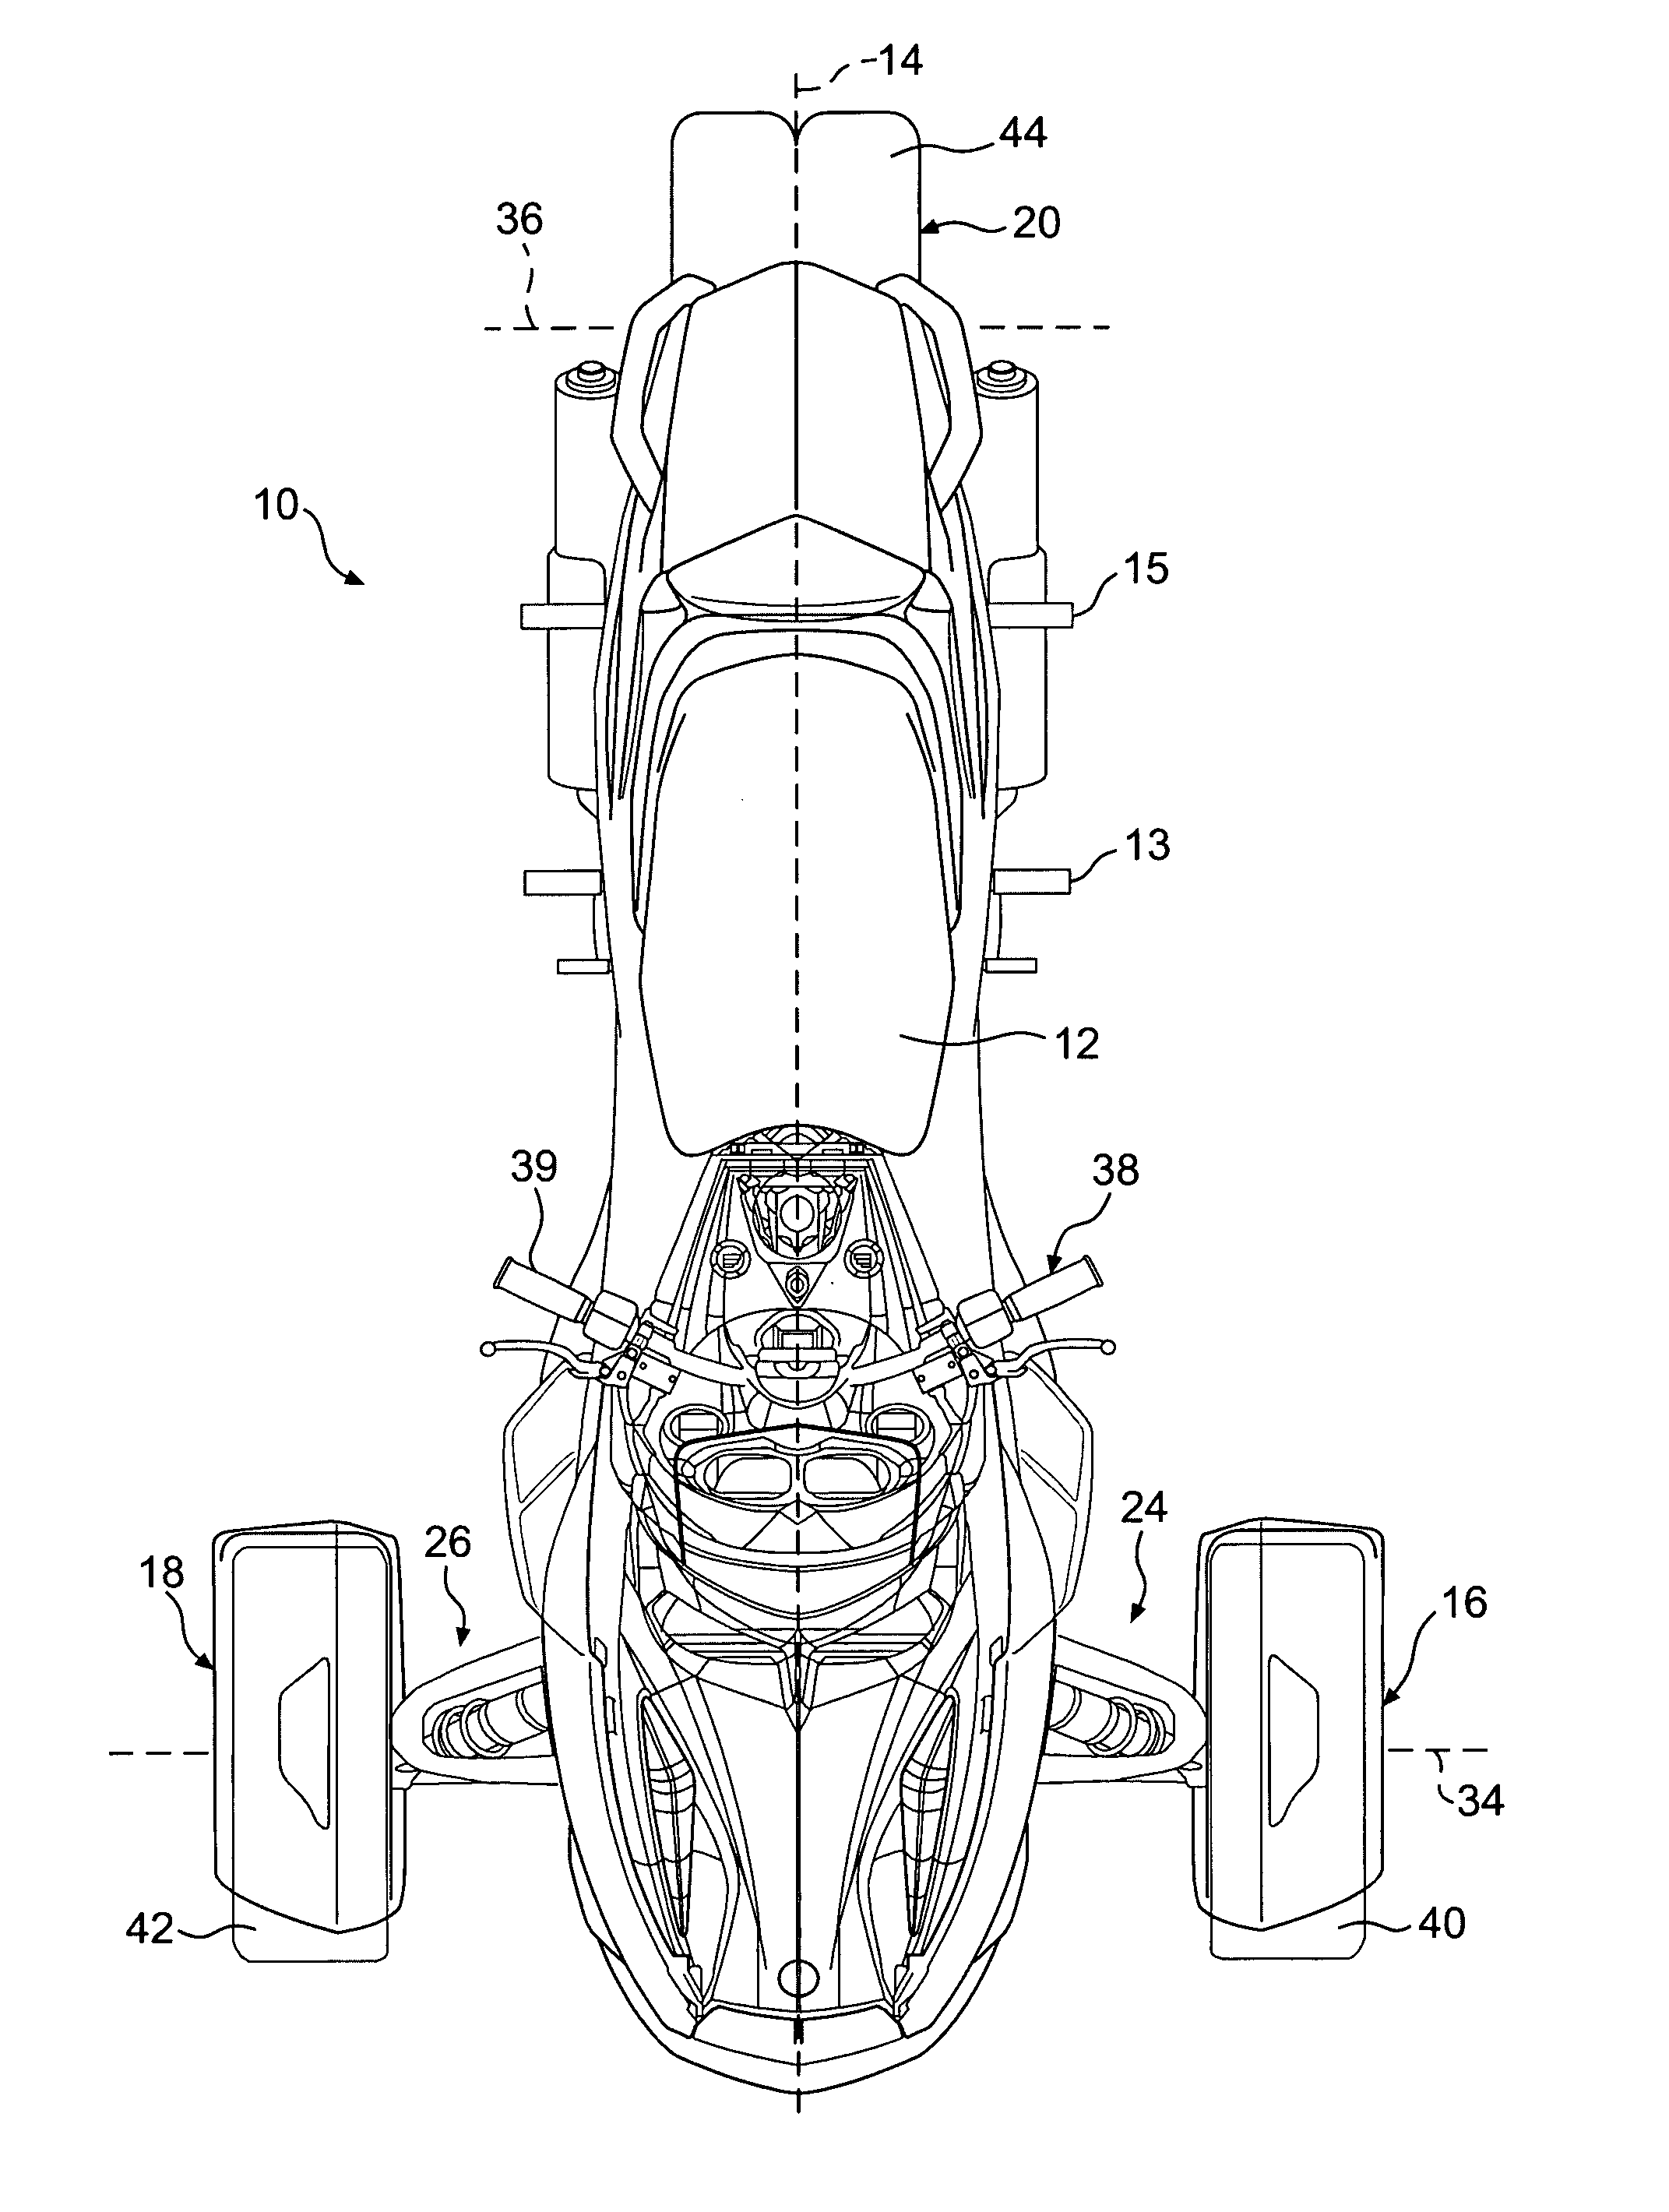 Ergonomic arrangement for a three-wheeled vehicle